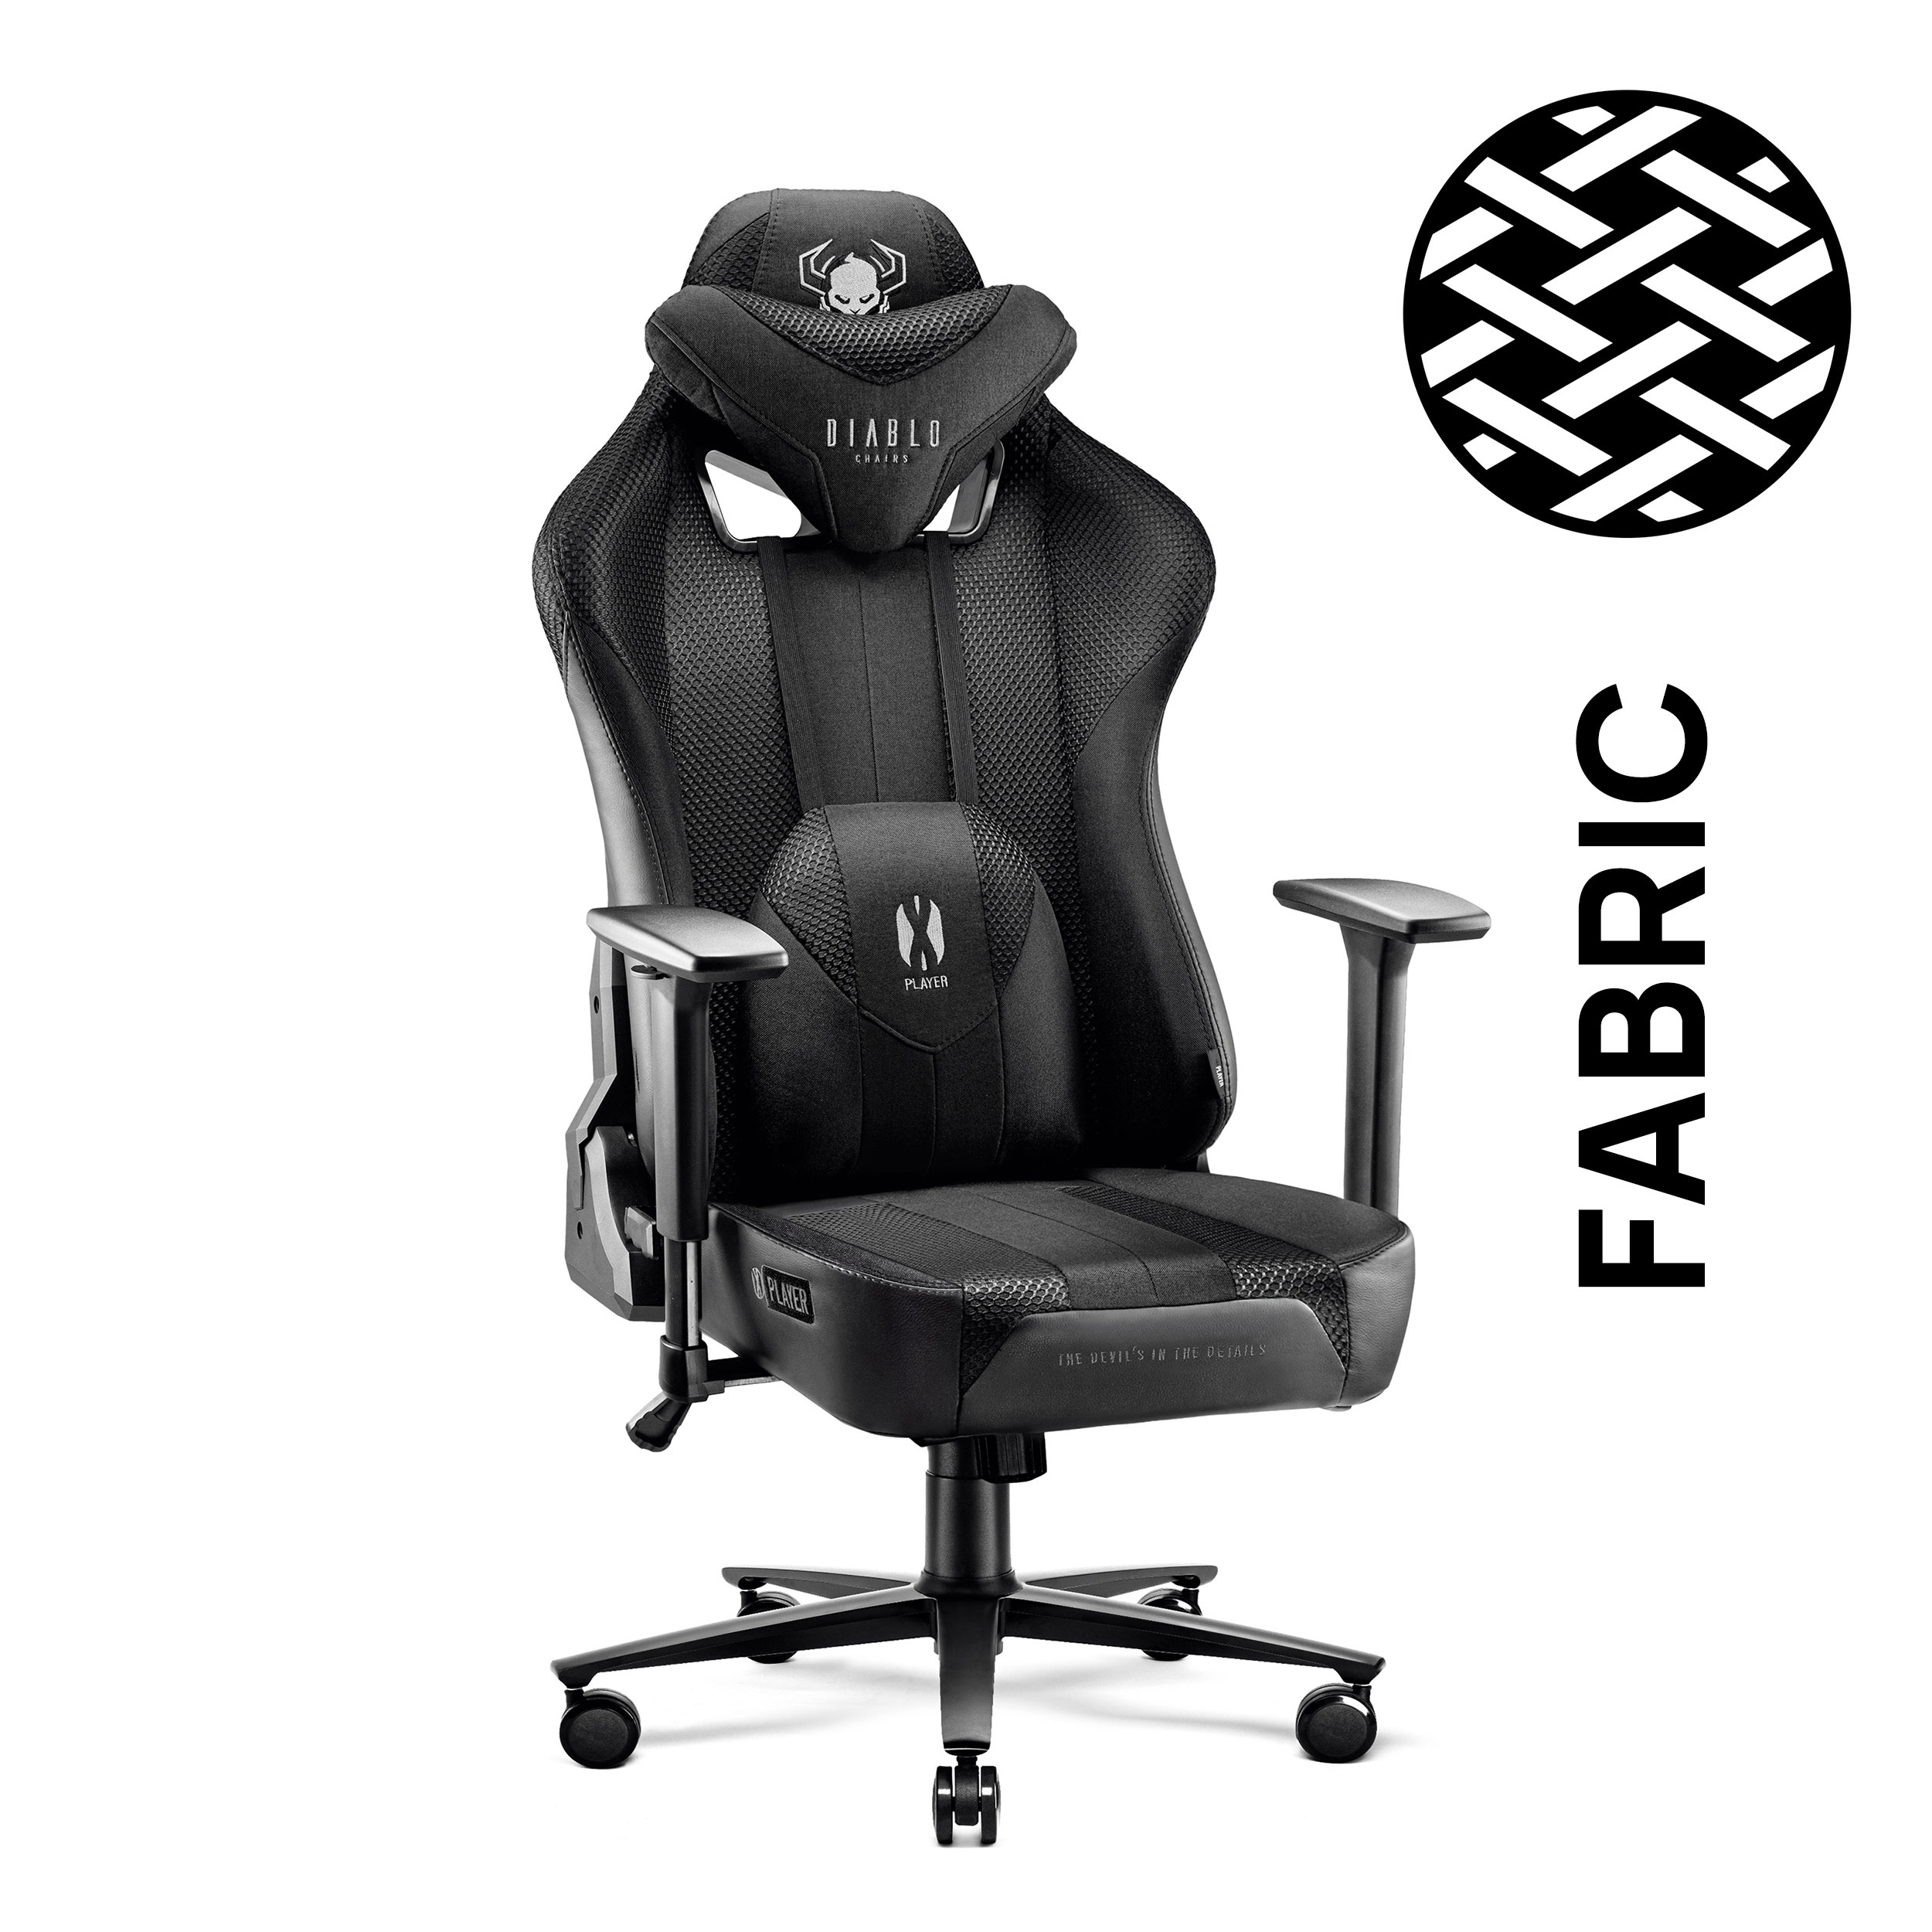 DIABLO CHAIRS GAMING 2.0 NORMAL Gaming X-PLAYER Chair, STUHL black